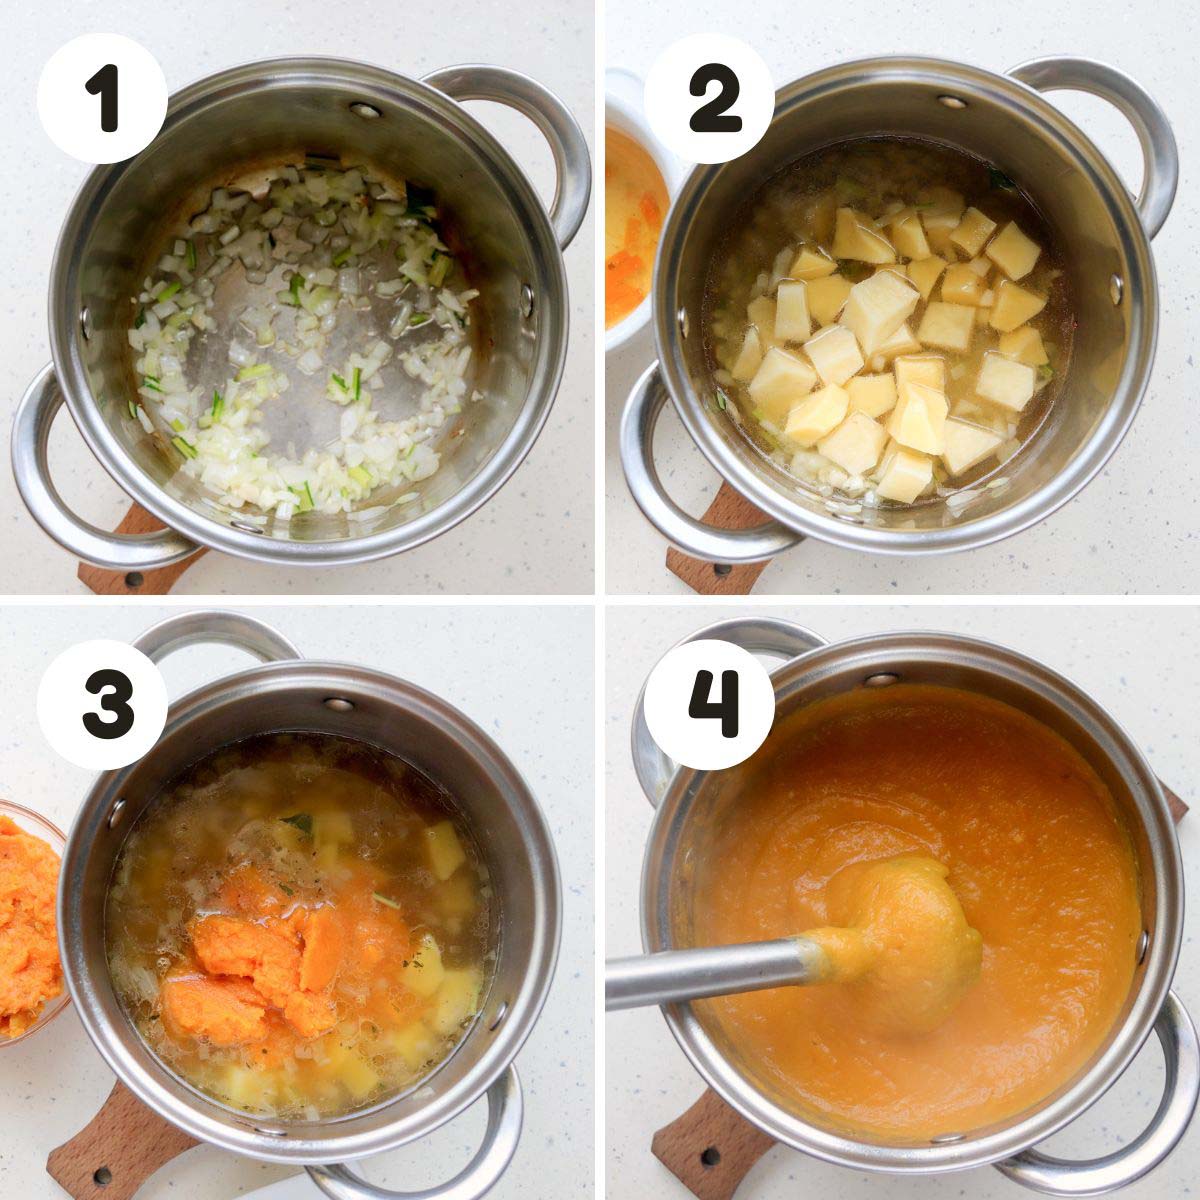 Steps to make the pumpkin soup.